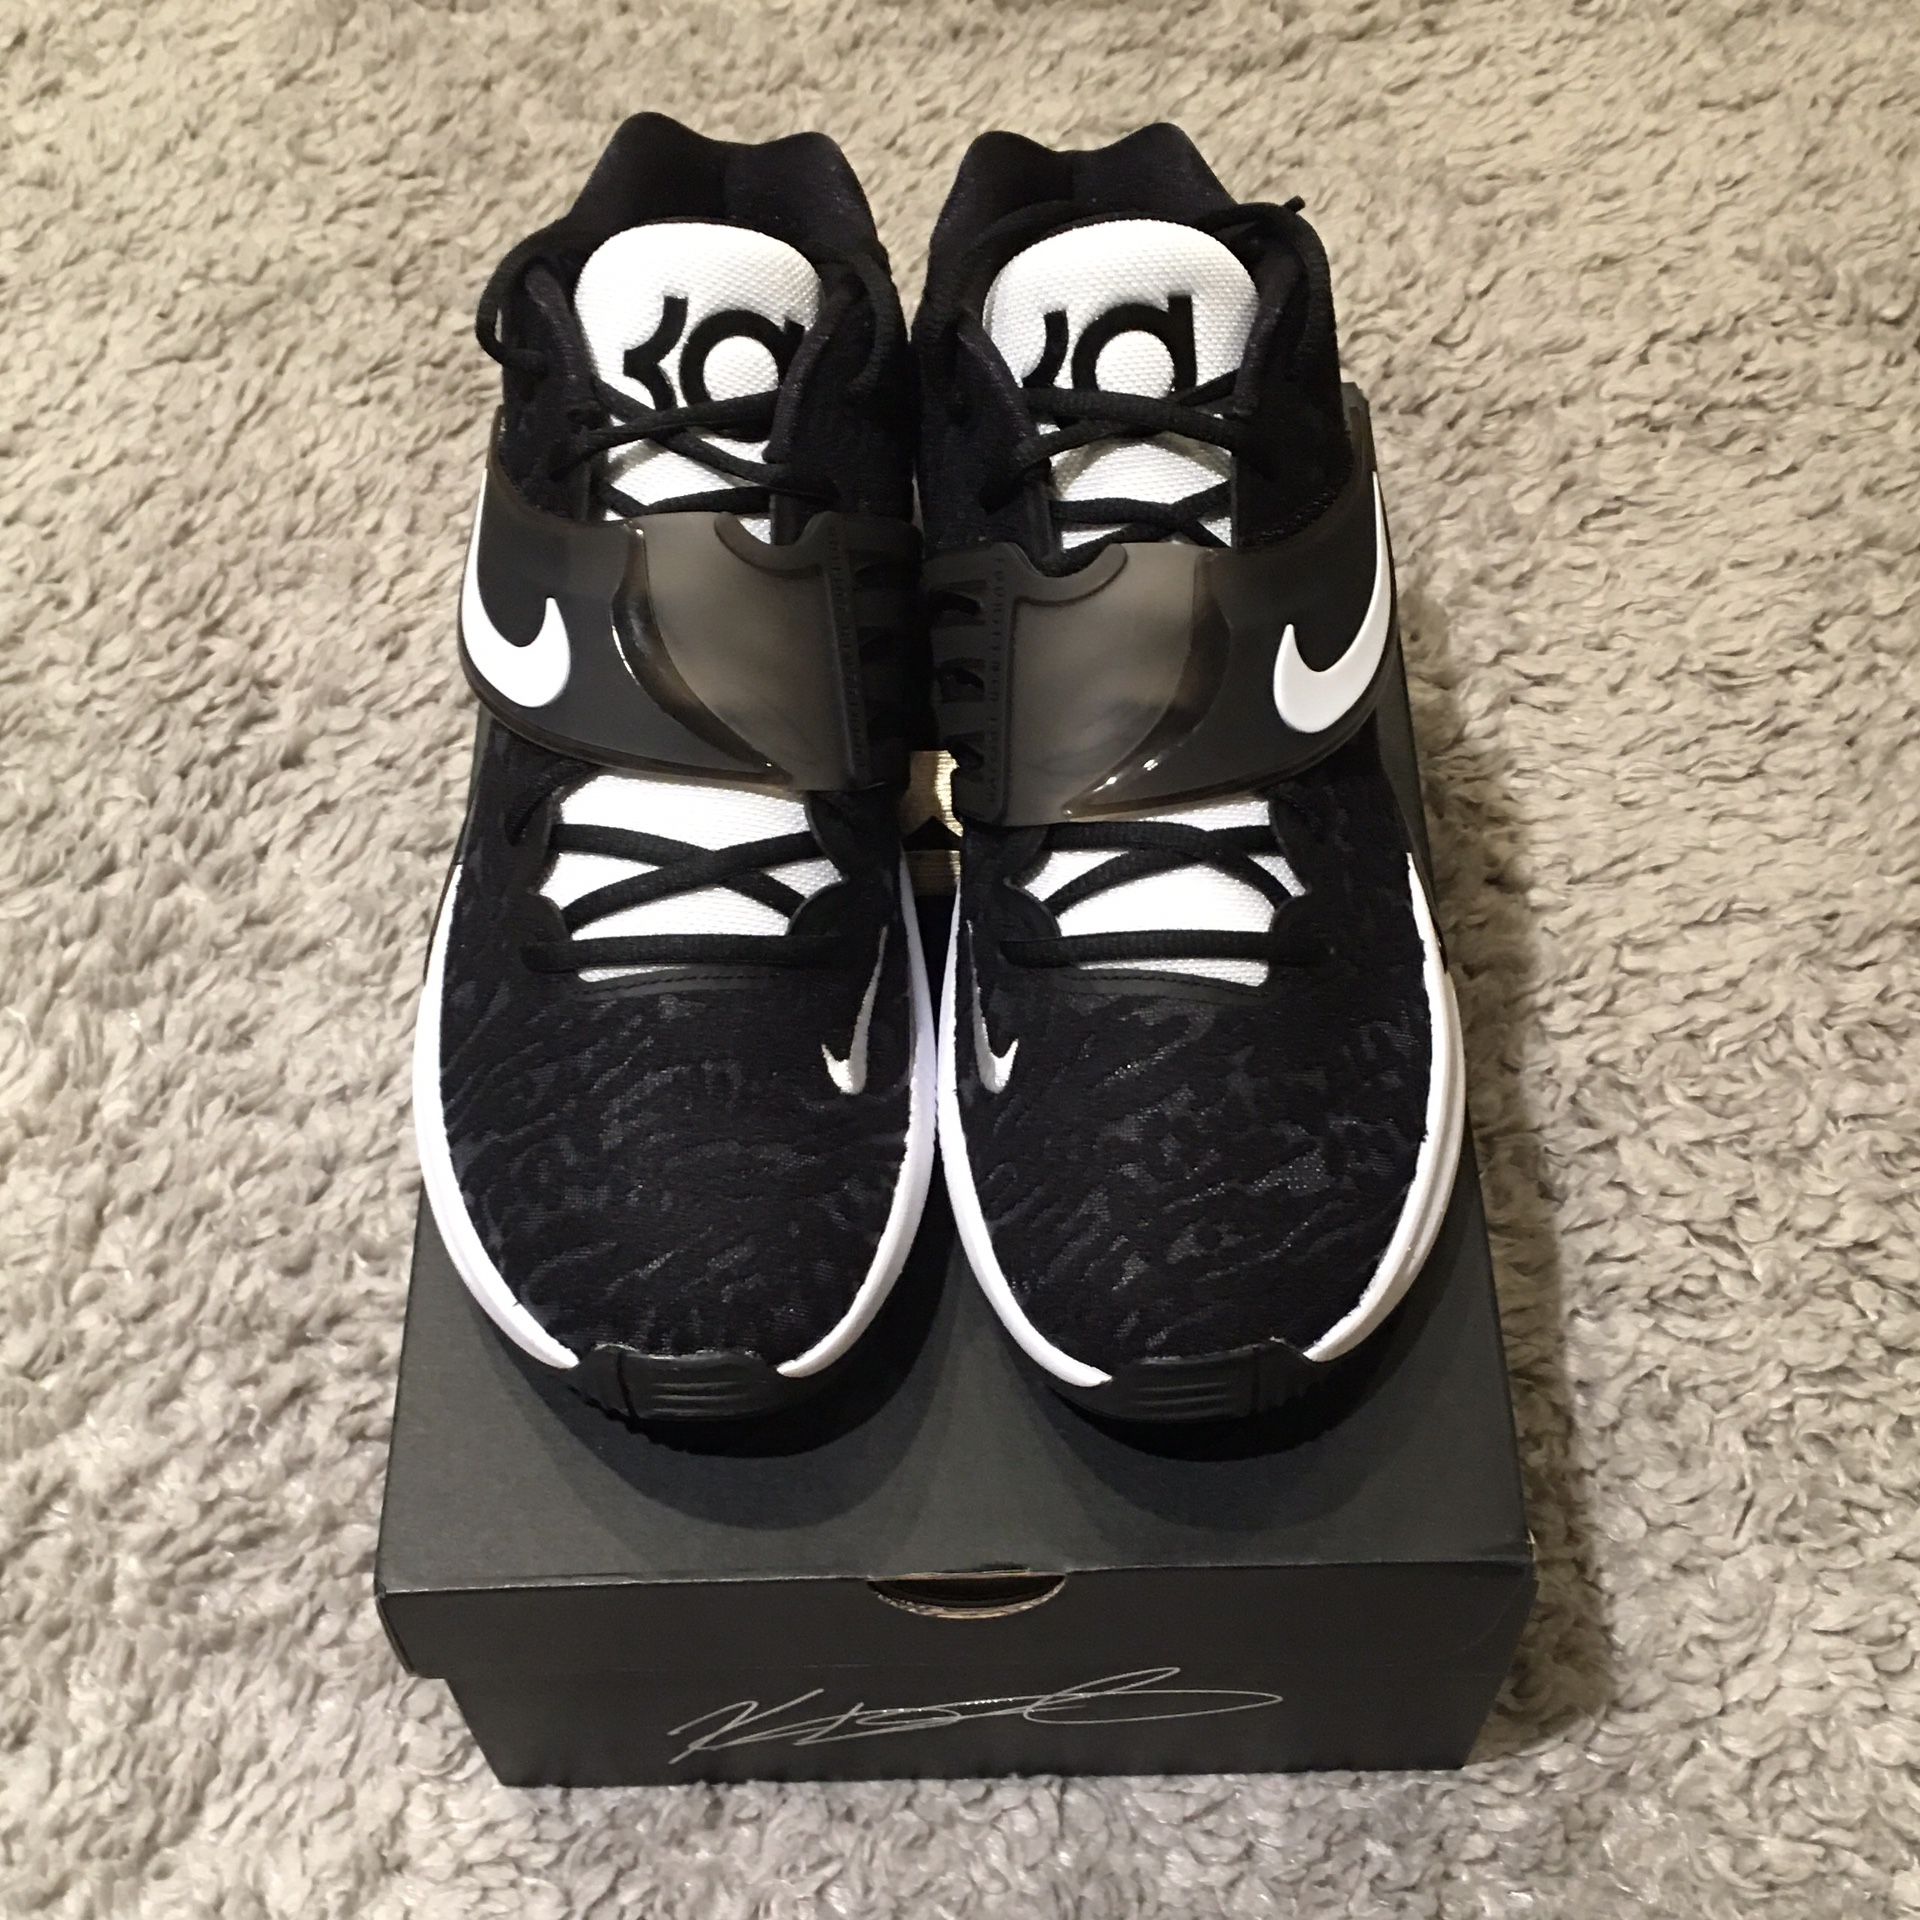 Nike KD14 TB Promo Black/White Men’s Basketball Shoes Sizes 10, 10.5, 11 DM5040-001